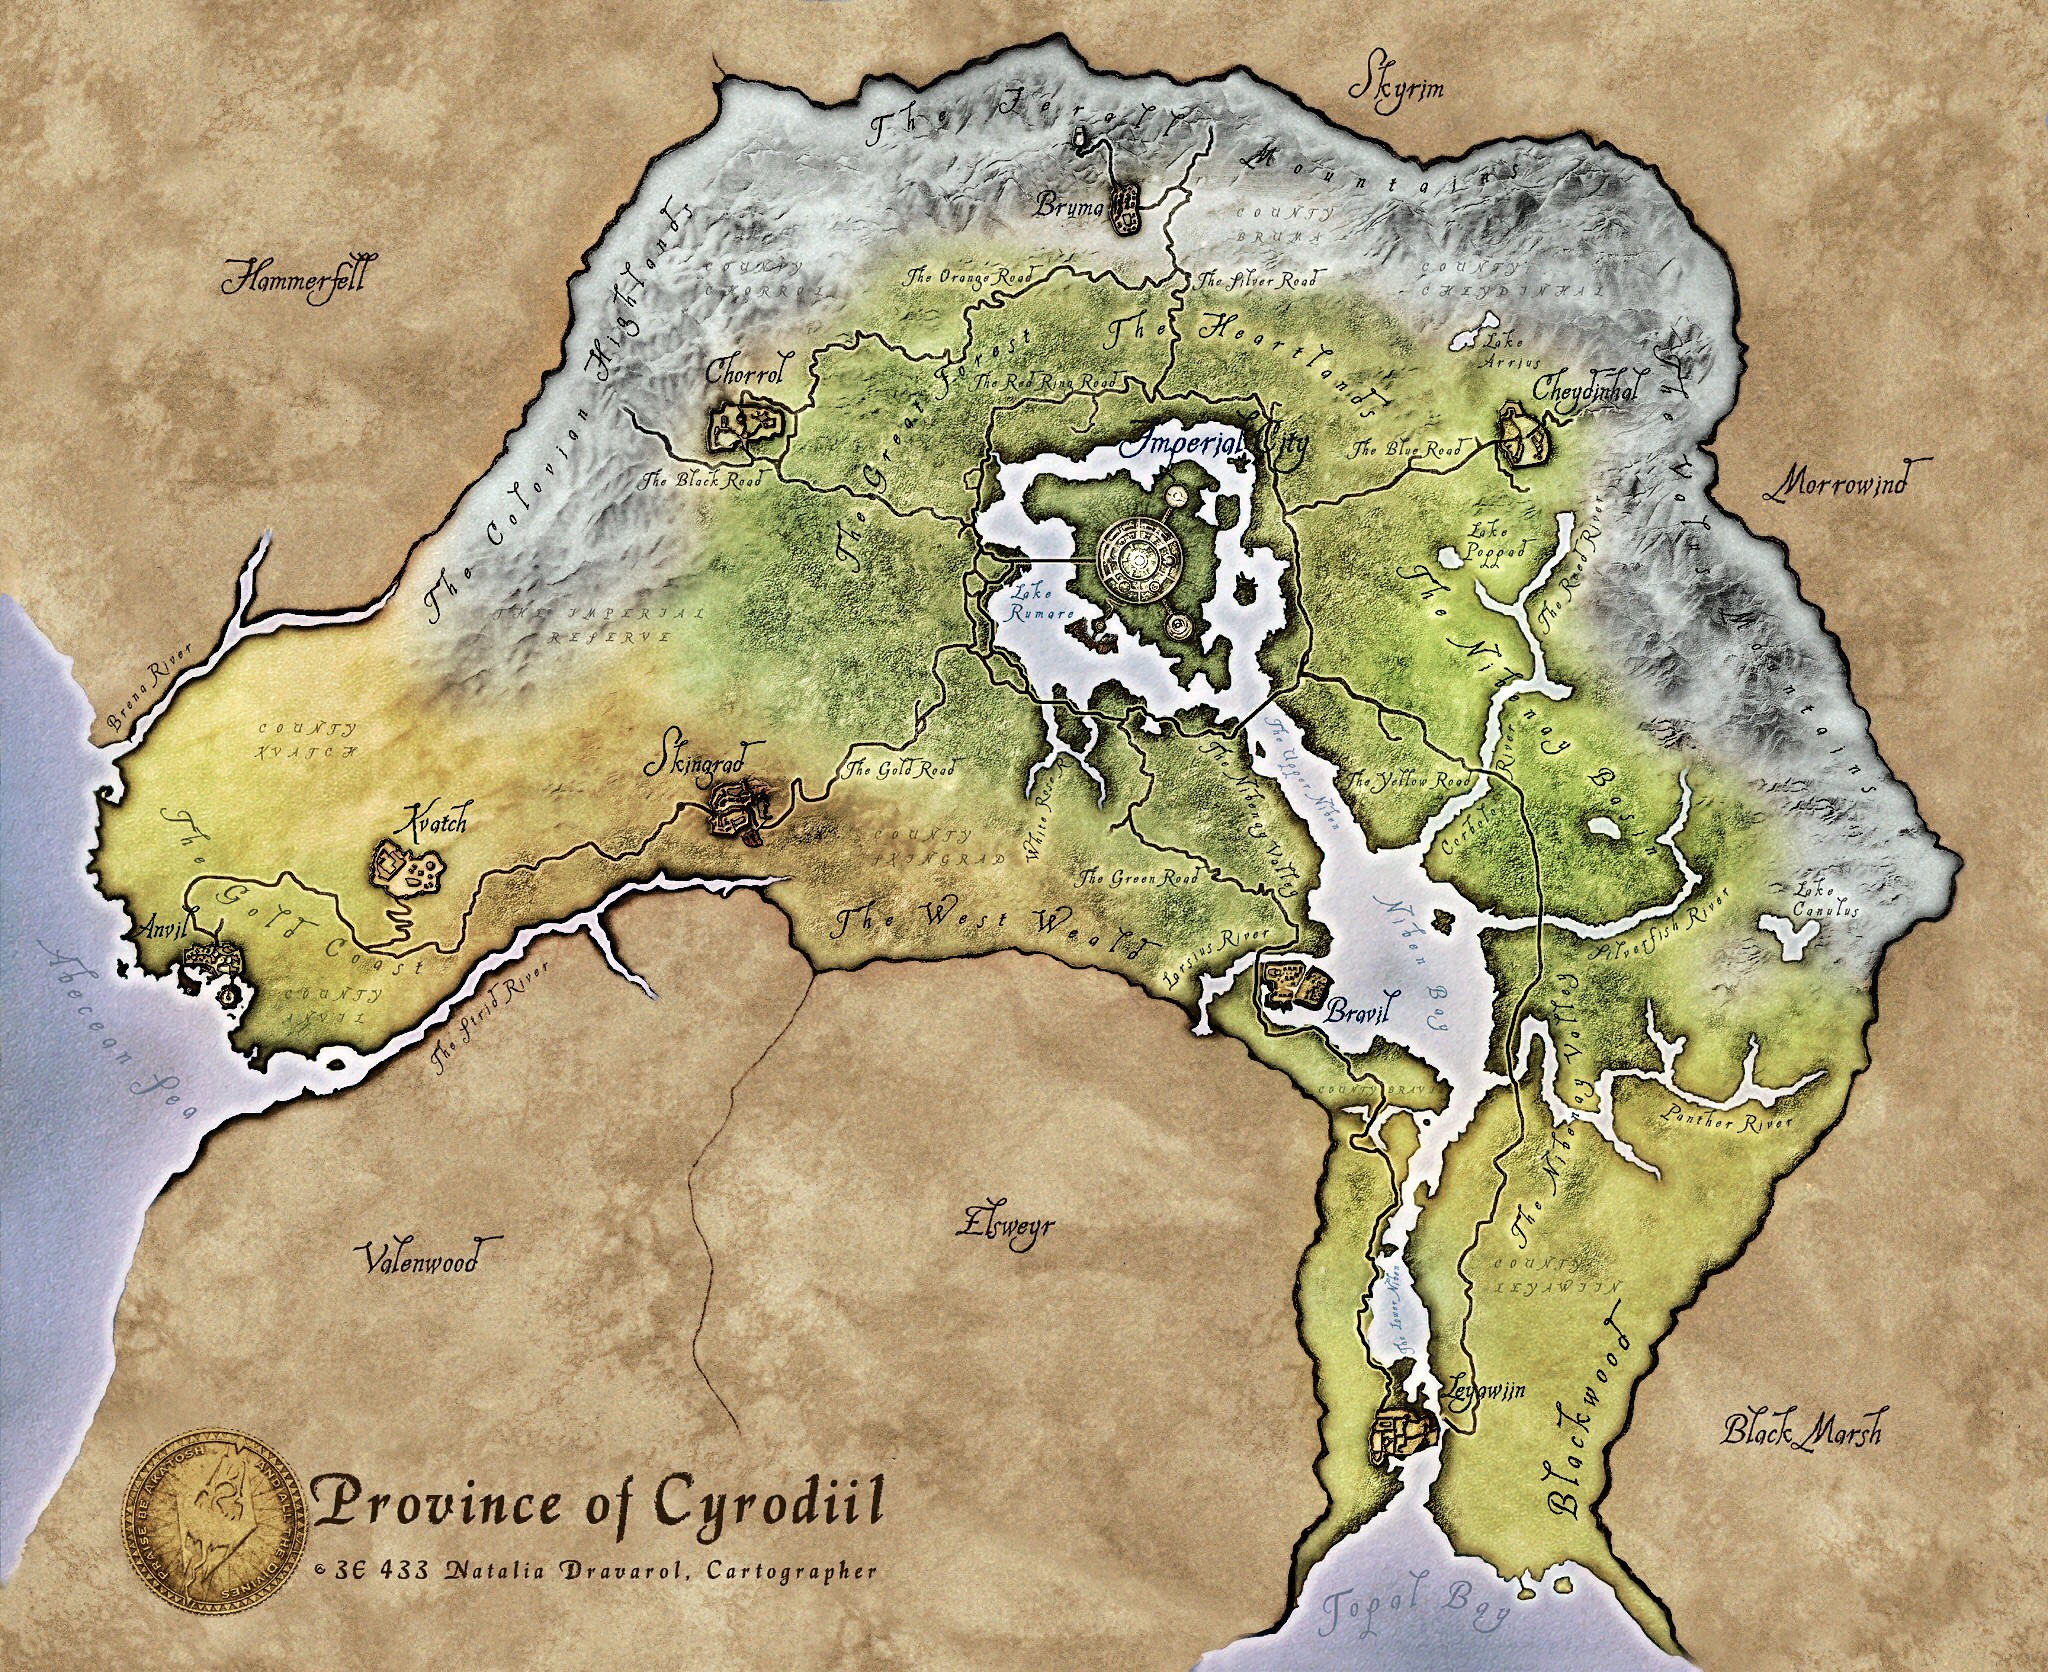 2048x1672 Province of Cyrodiil in Tamriel, map for The Elder Scrolls IV: Oblivion.